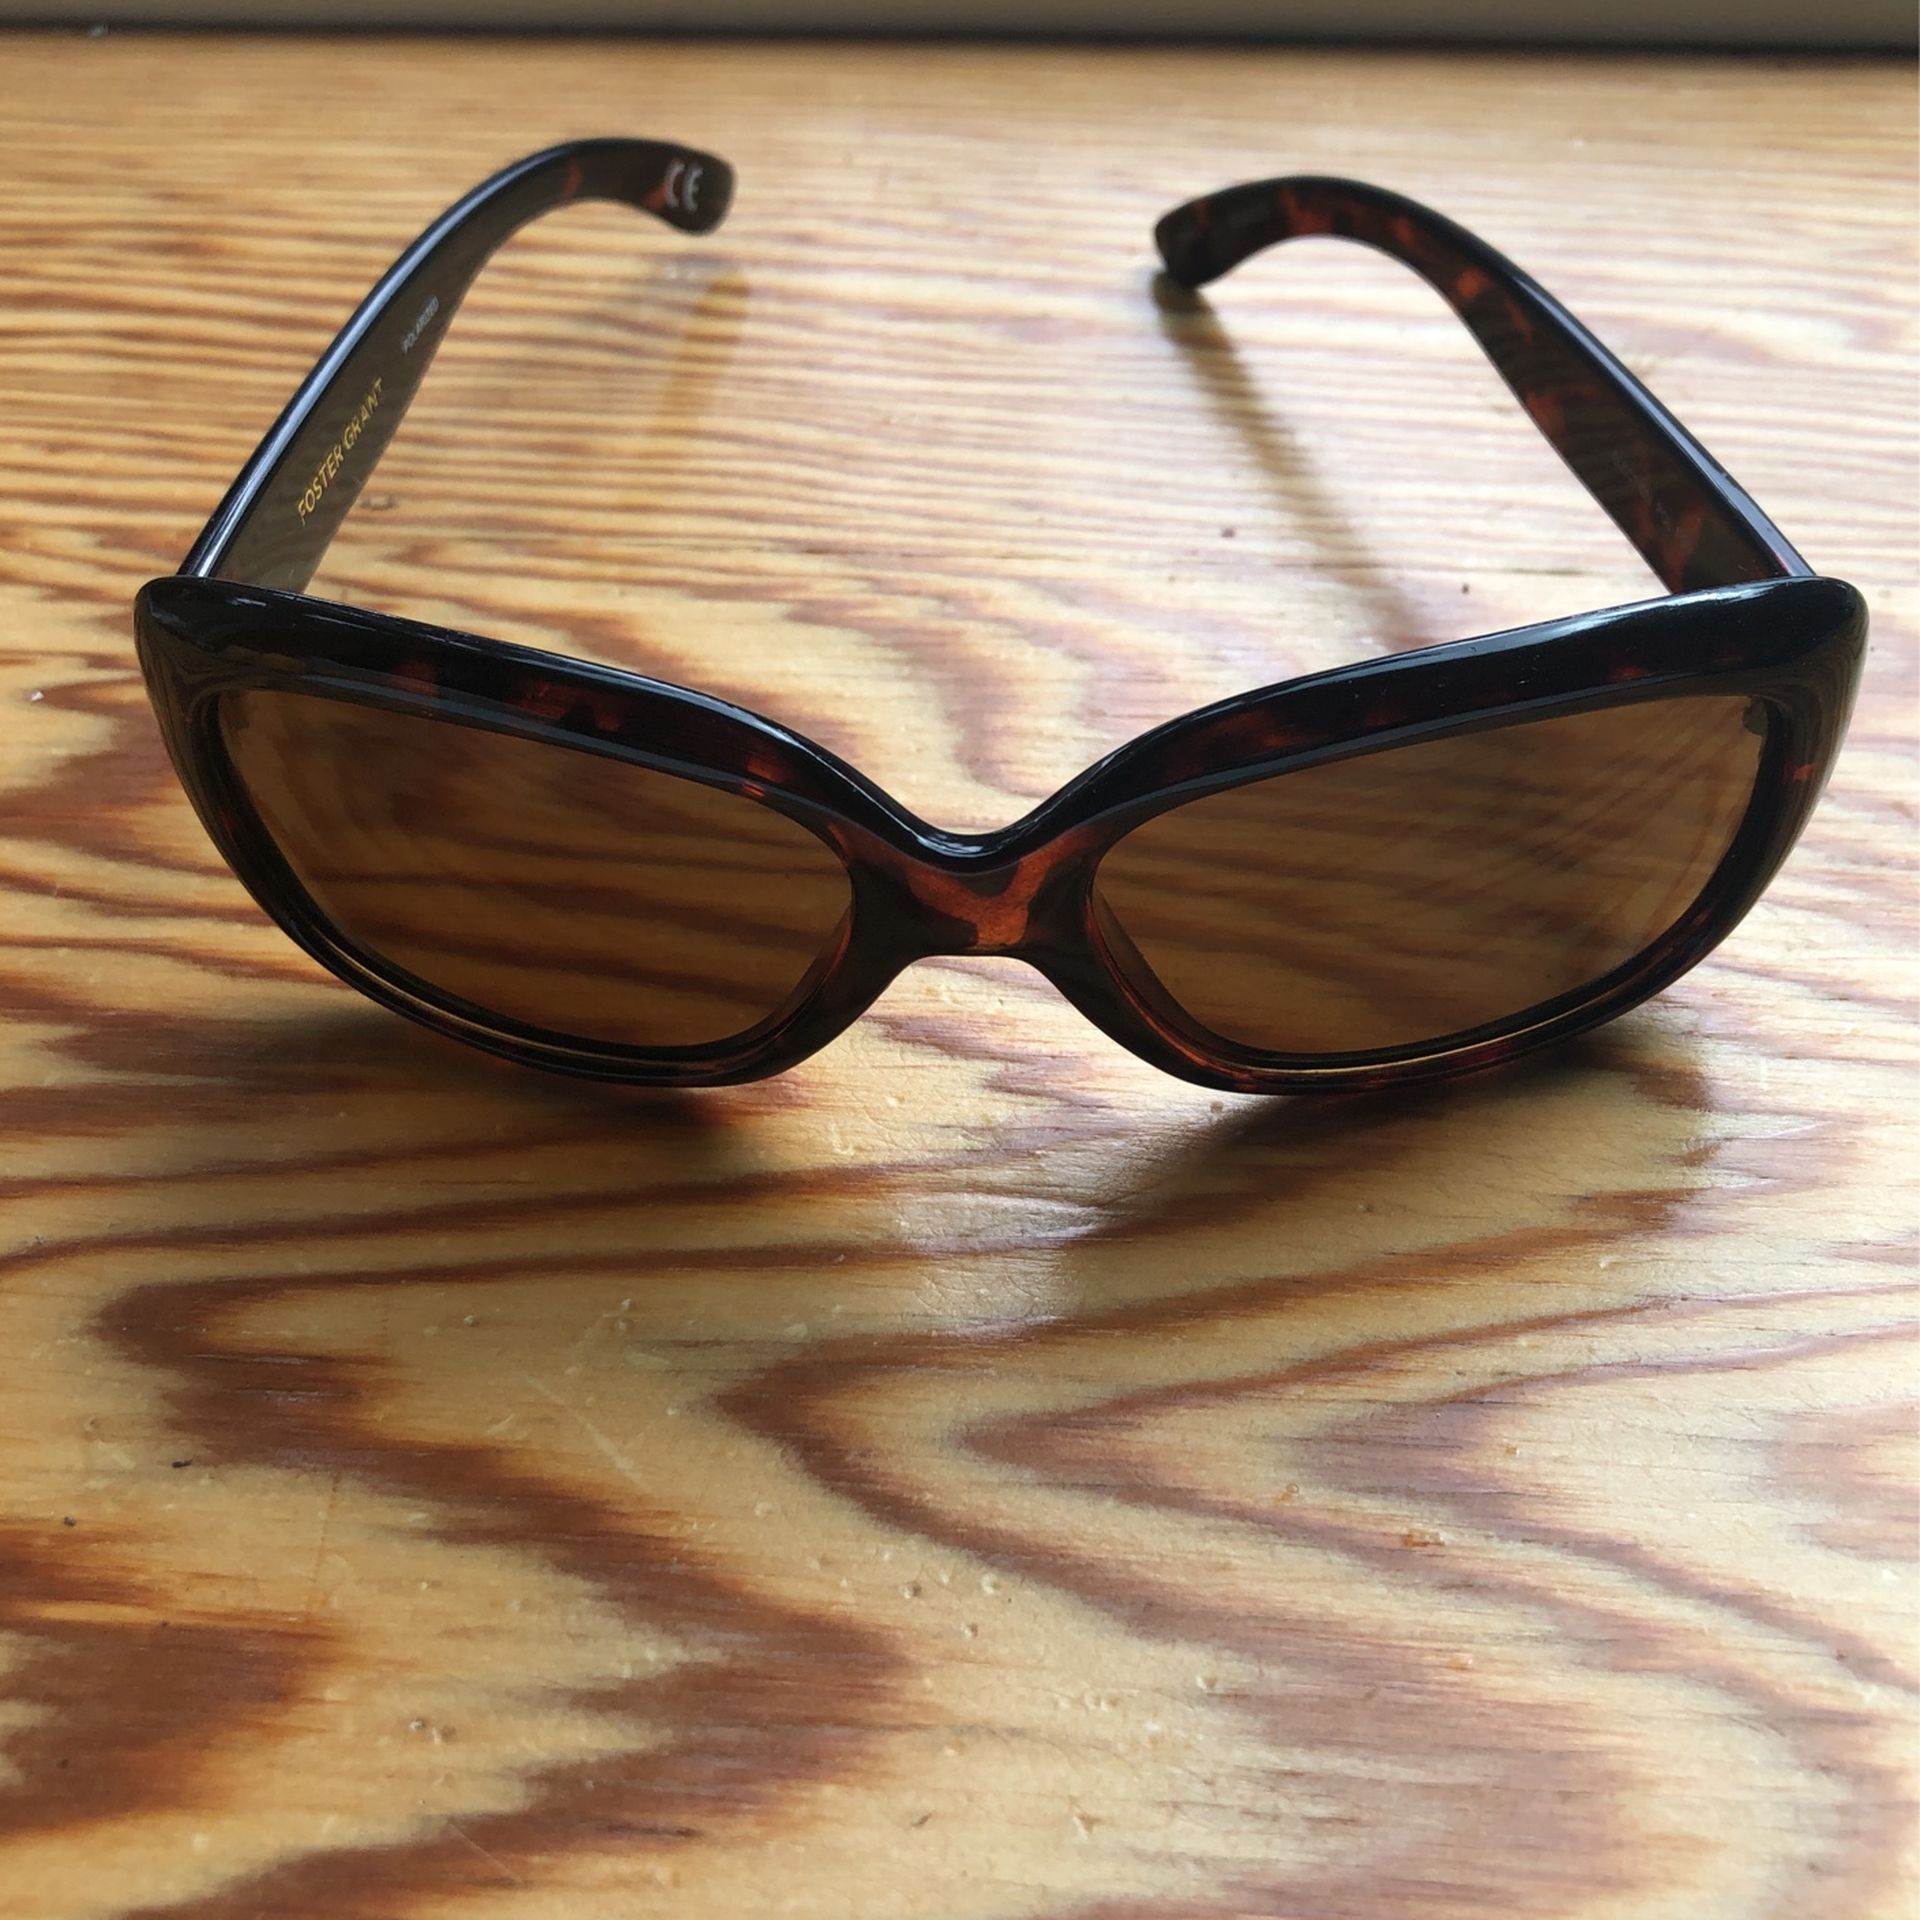 FREE-Foster Grant Women's  Sunglasses